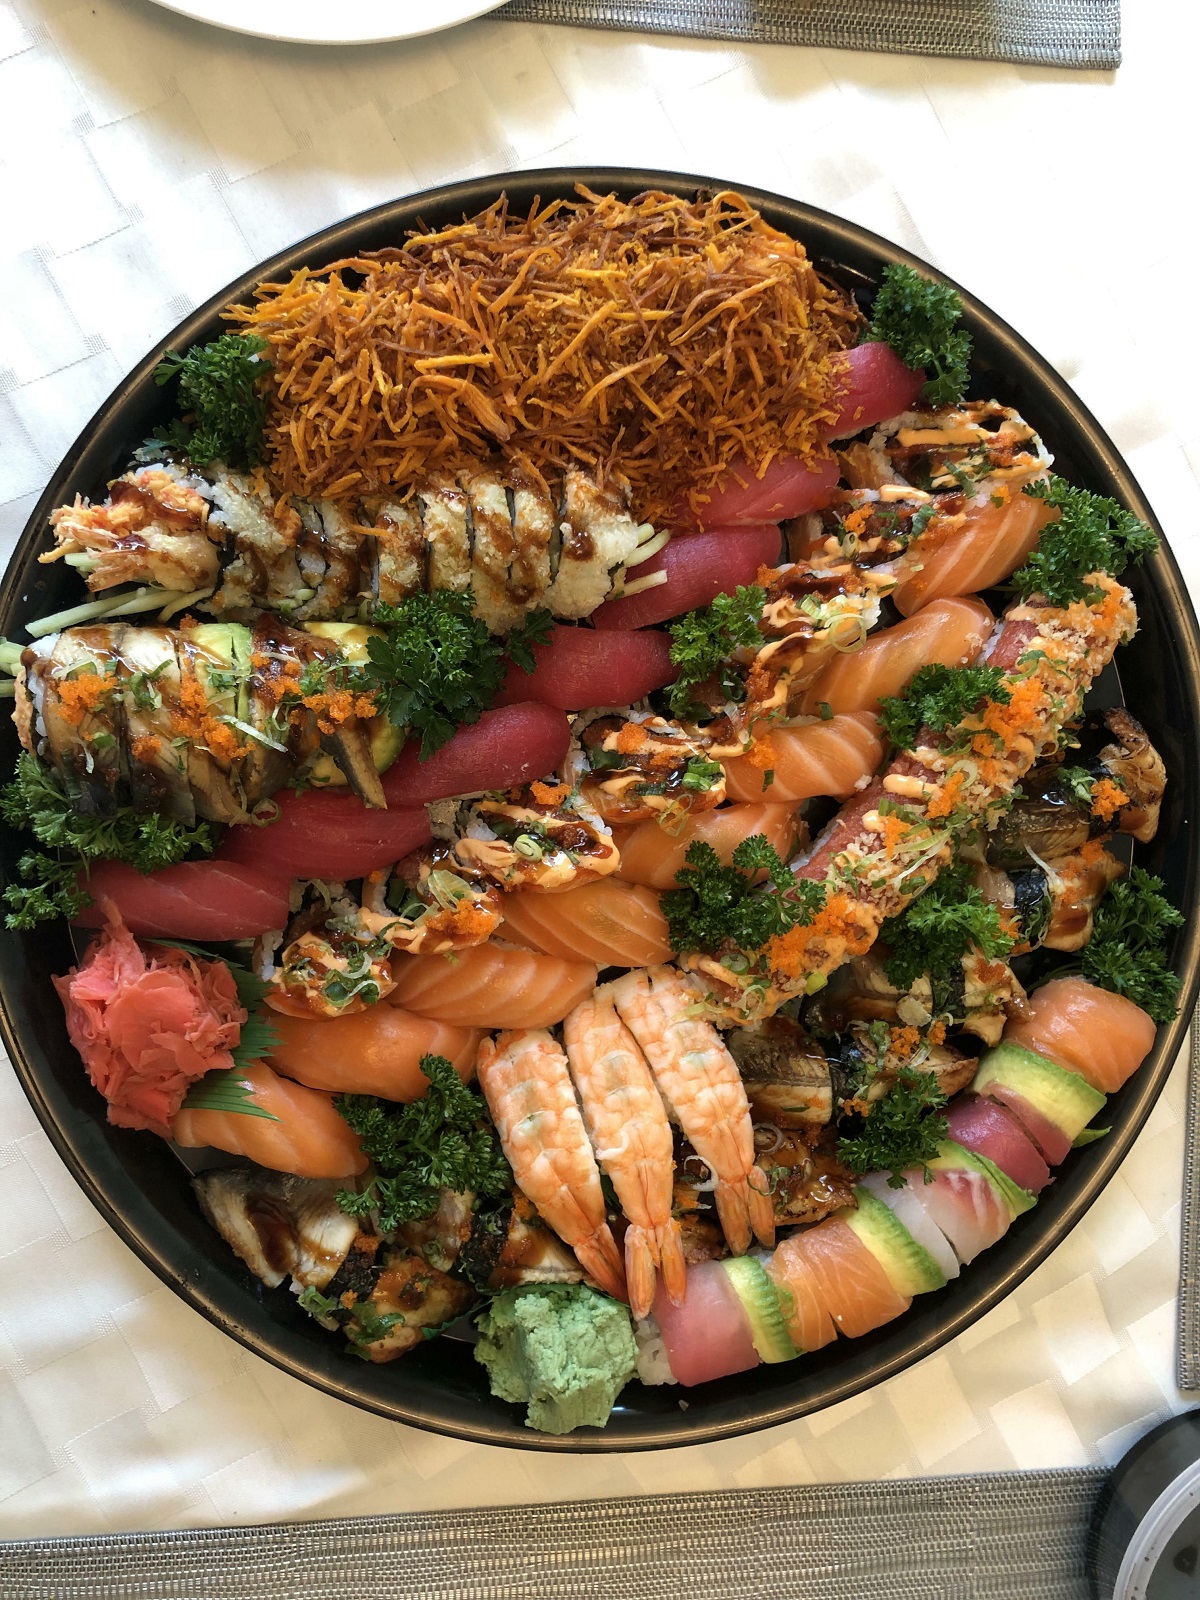 Birthday Sushi Platter For One